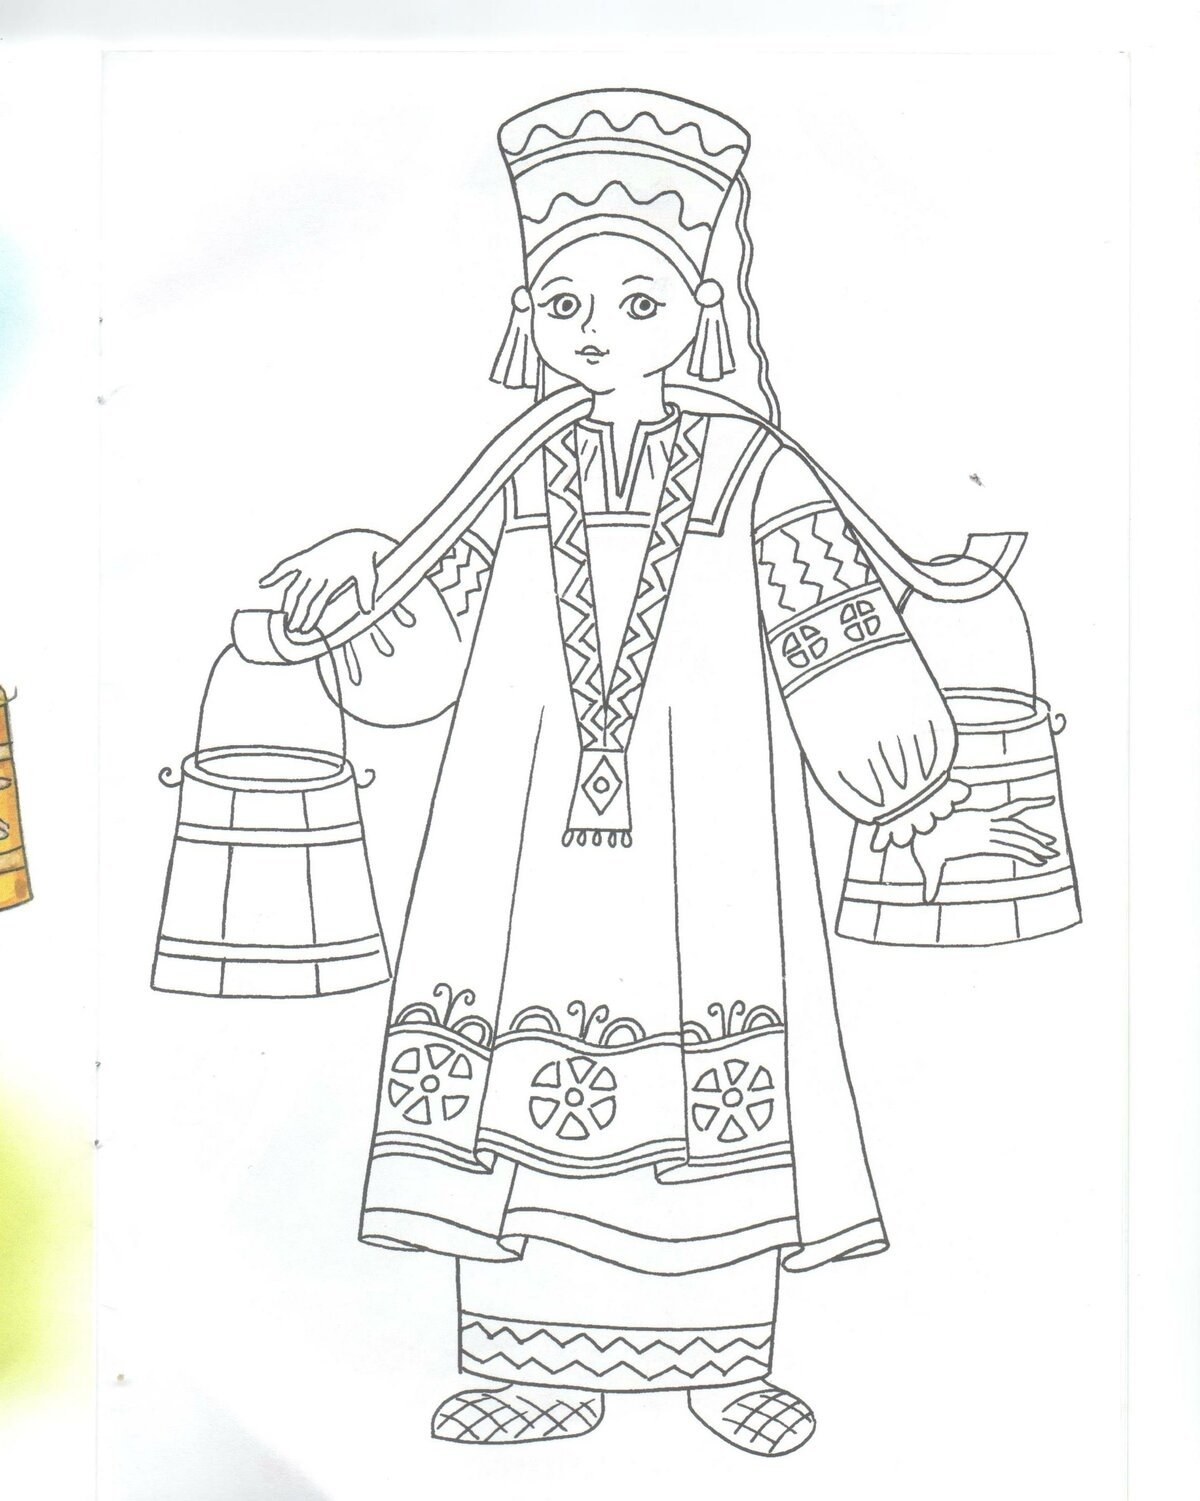 Fancy folk costume coloring book for kids